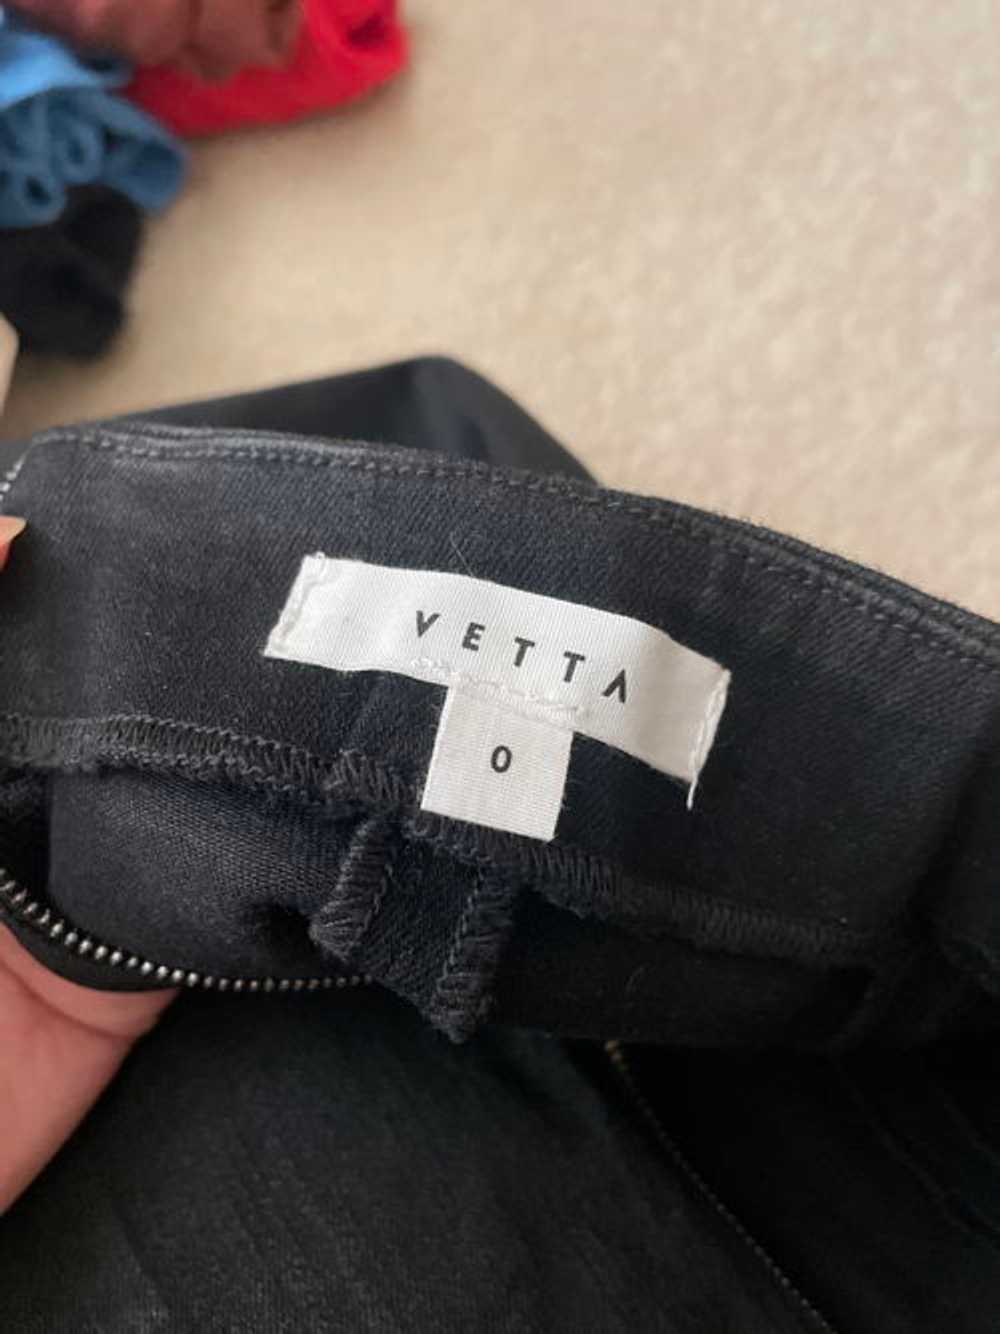 VETTA The Leatherette Skirt - image 7